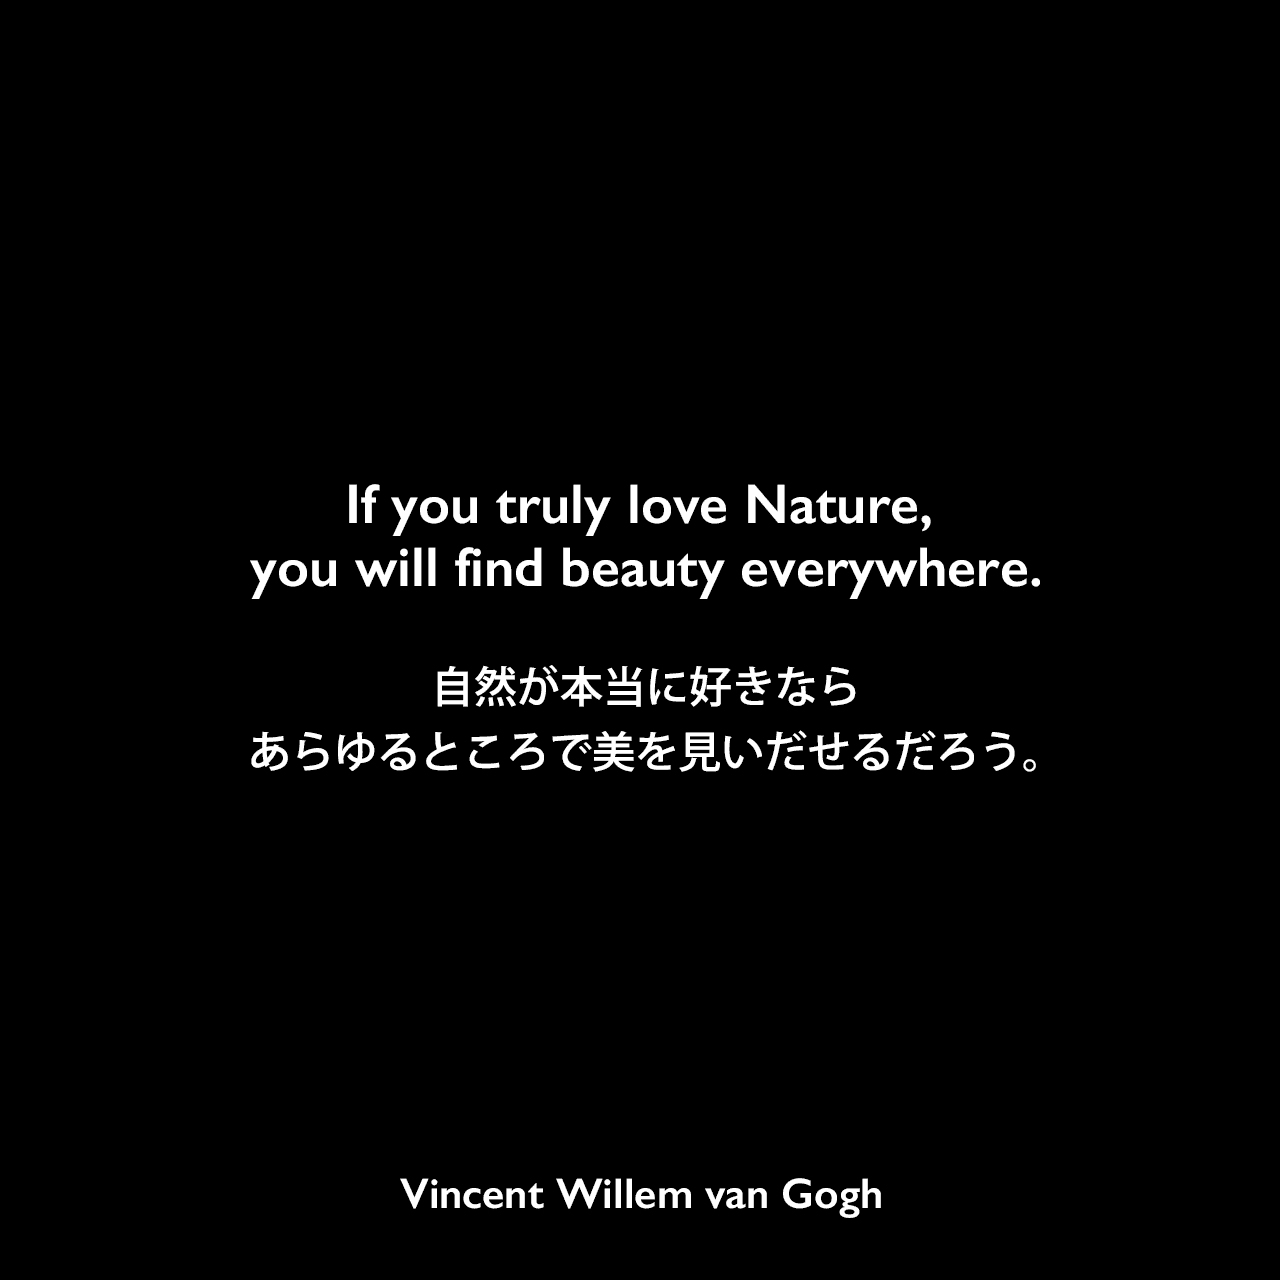 If you truly love Nature, you will find beauty everywhere.自然が本当に好きなら、あらゆるところで美を見いだせるだろう。- ゴッホの弟テオへ宛てた手紙よりVincent Willem van Gogh